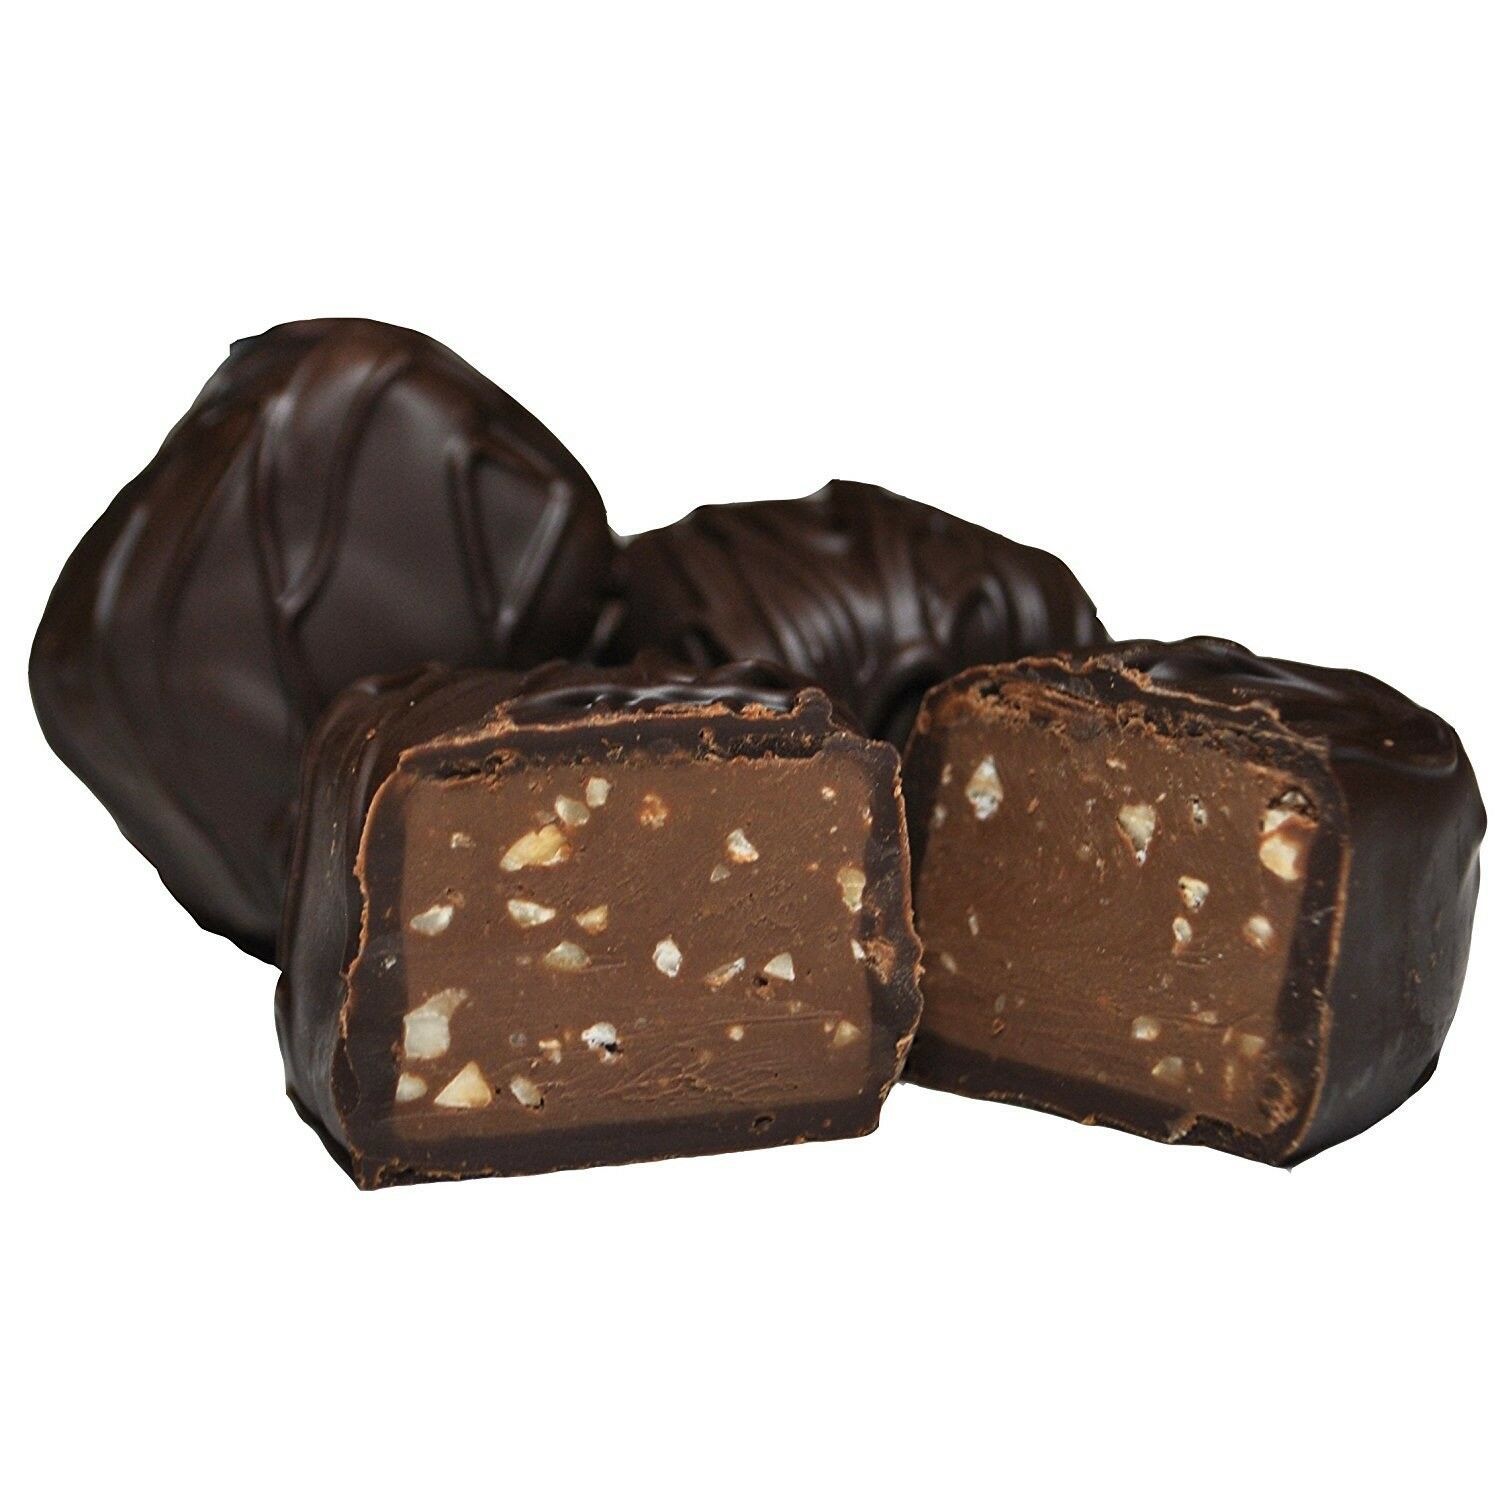 Primary image for Philadelphia Candies Hazelnut Meltaway Truffles, Dark Chocolate 1 Pound Gift